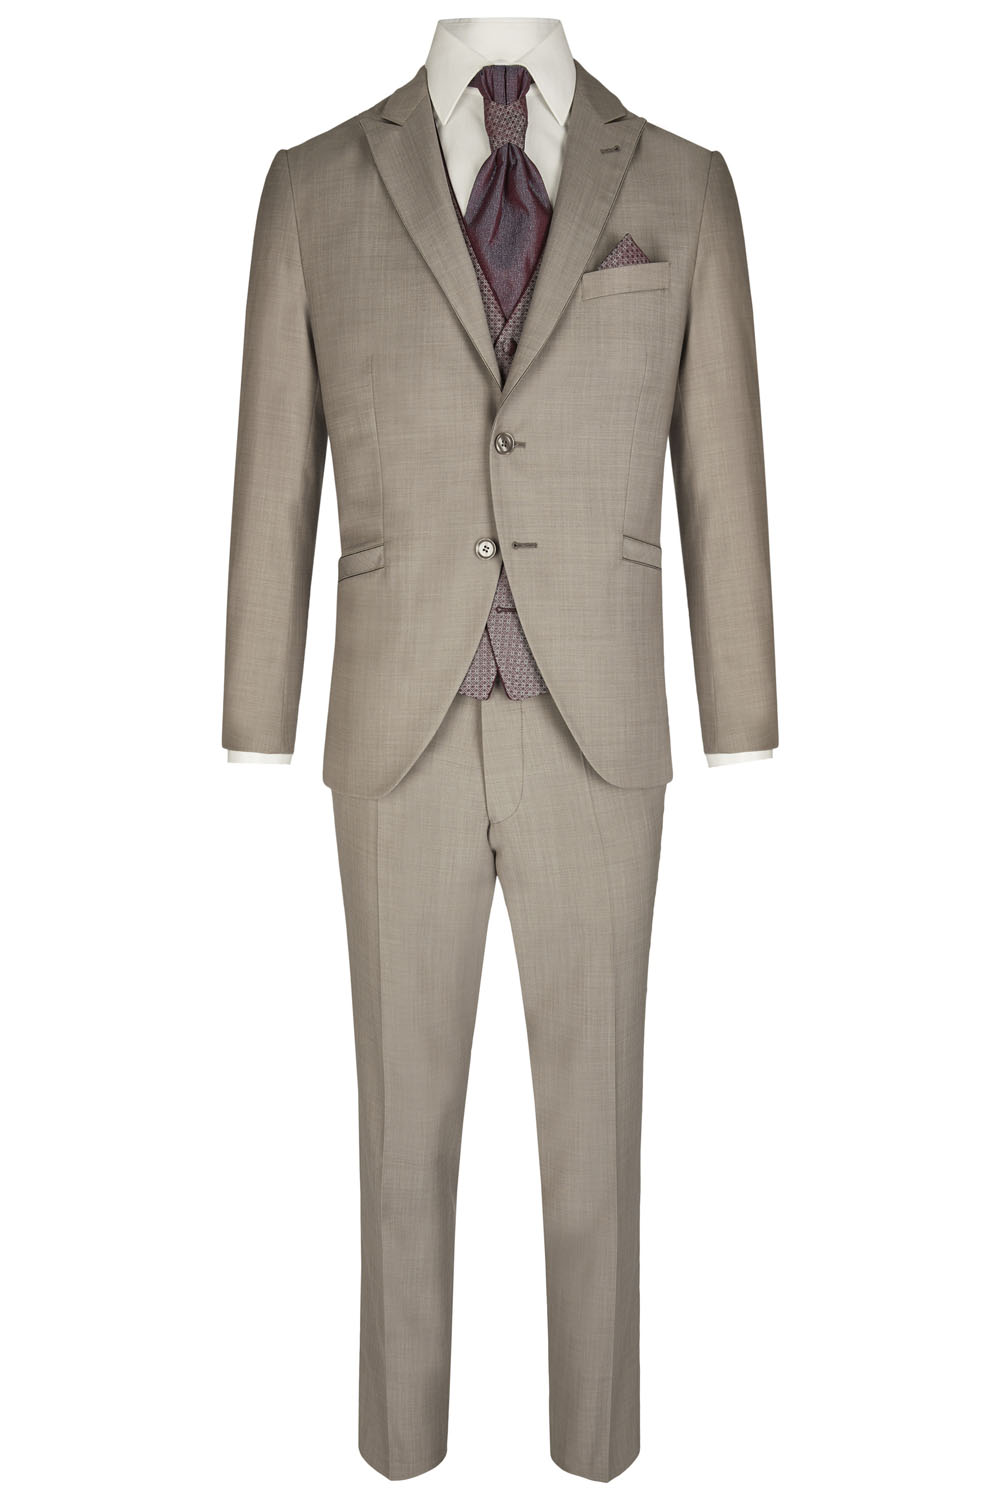 Beige 3 piece Wedding Suit - Tom Murphy's Formal and Menswear